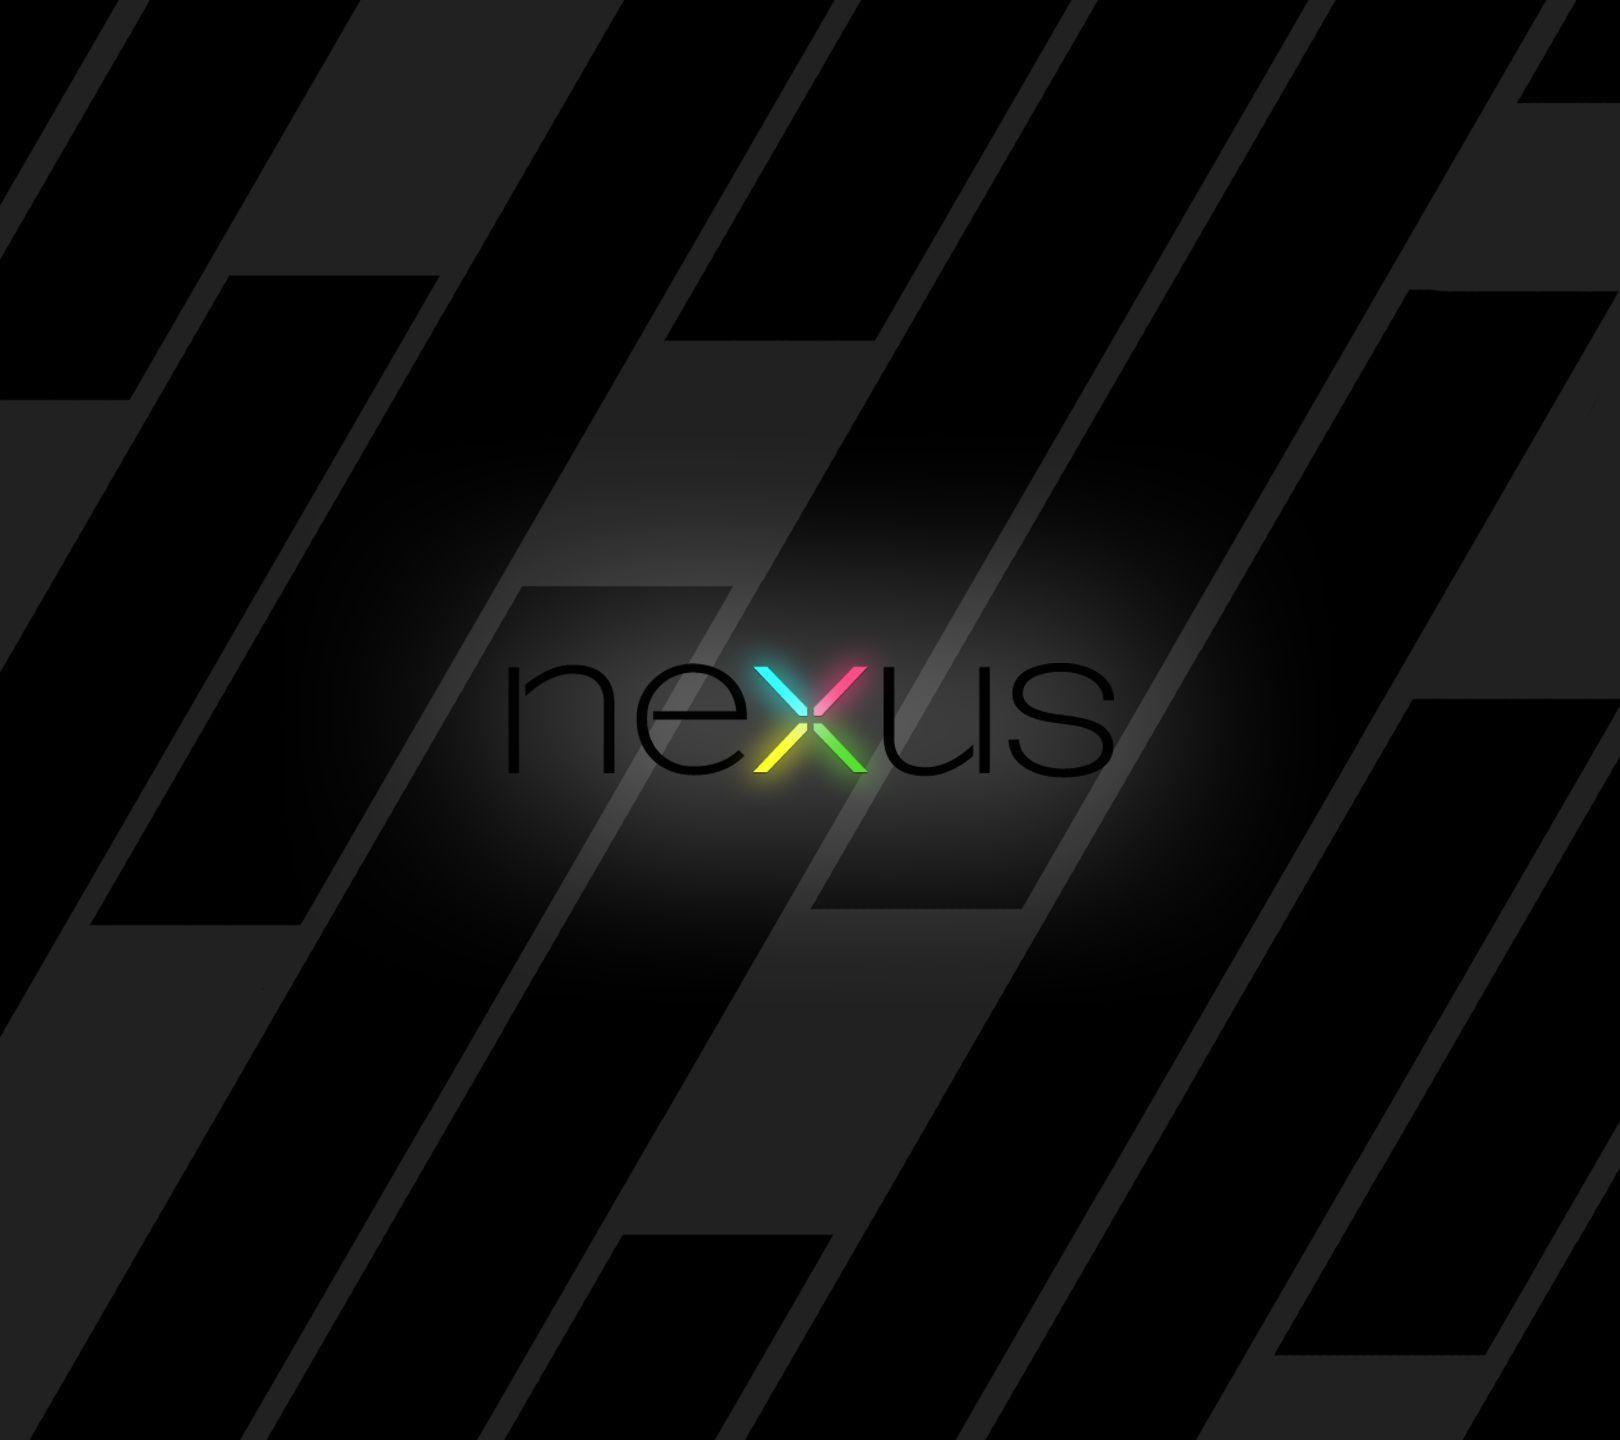 nexus 5 wallpaper. Free Blackberry Themes. Free Blackberry Themes